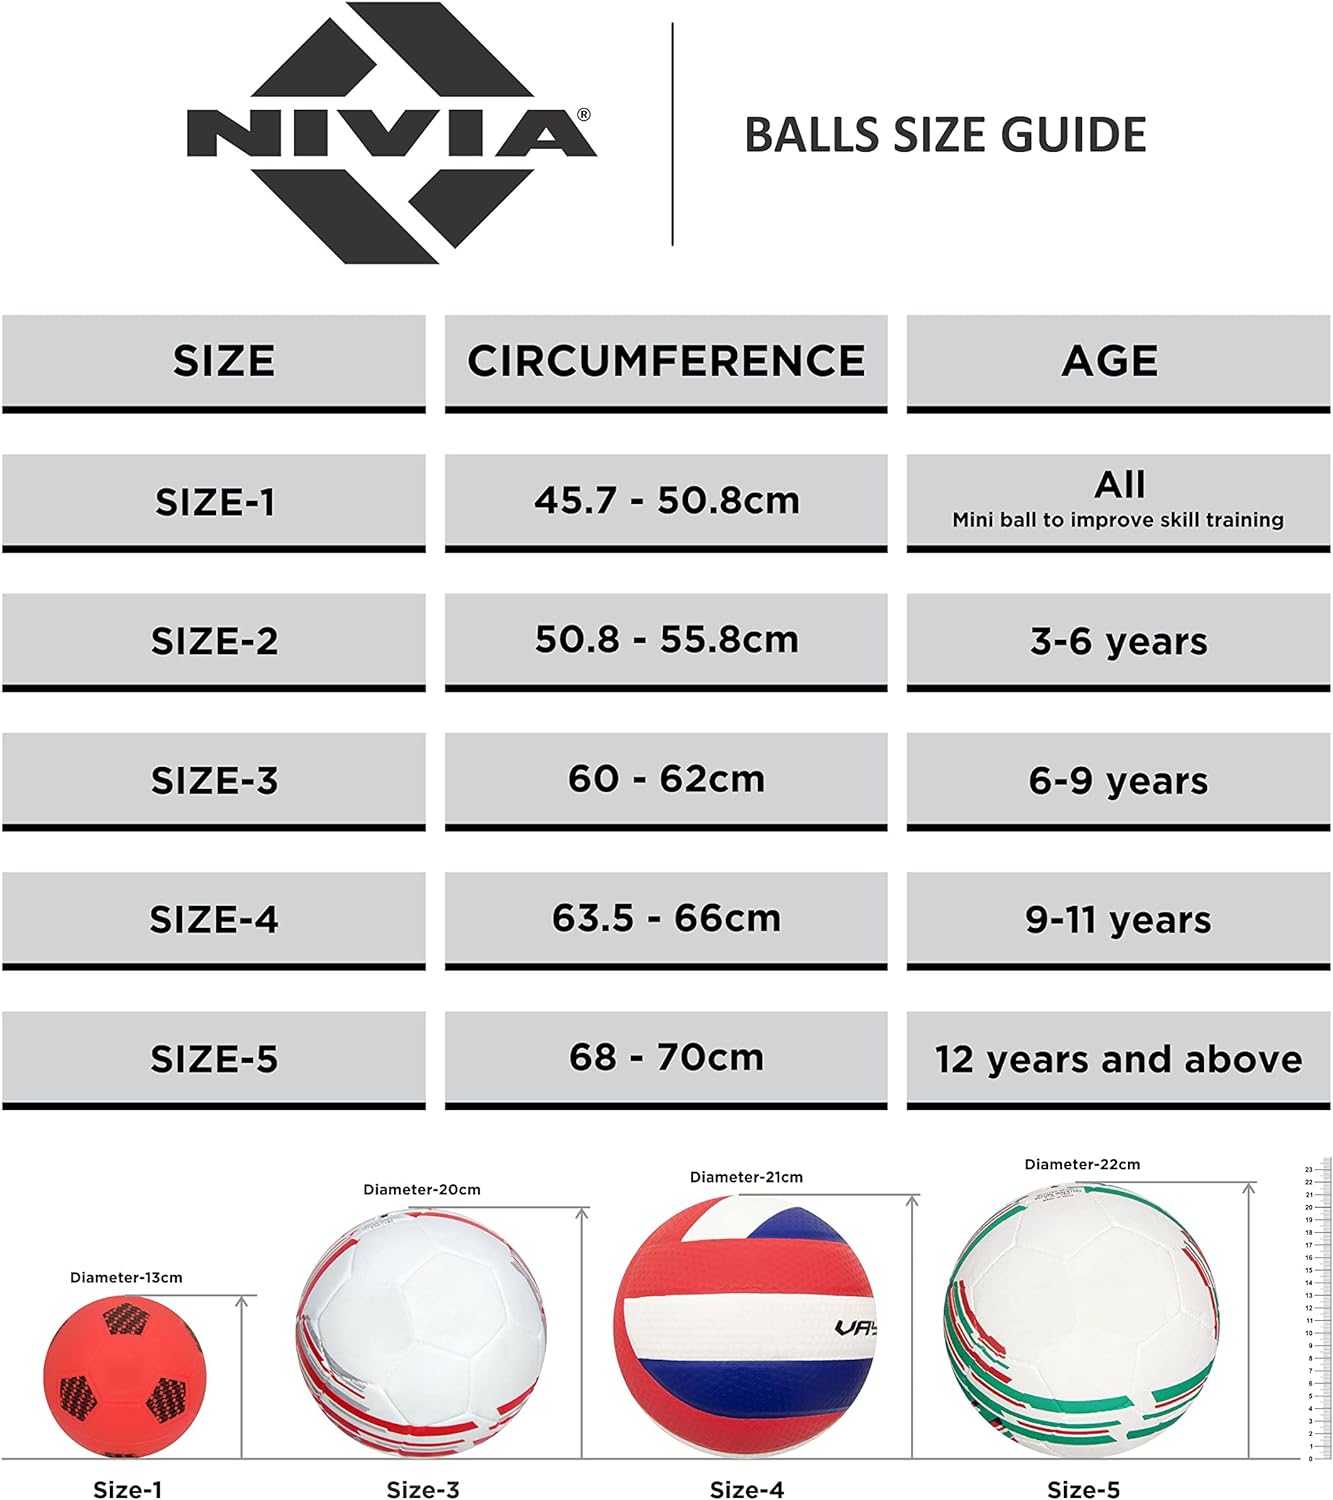 Nivia Trainer Football (Size-5)